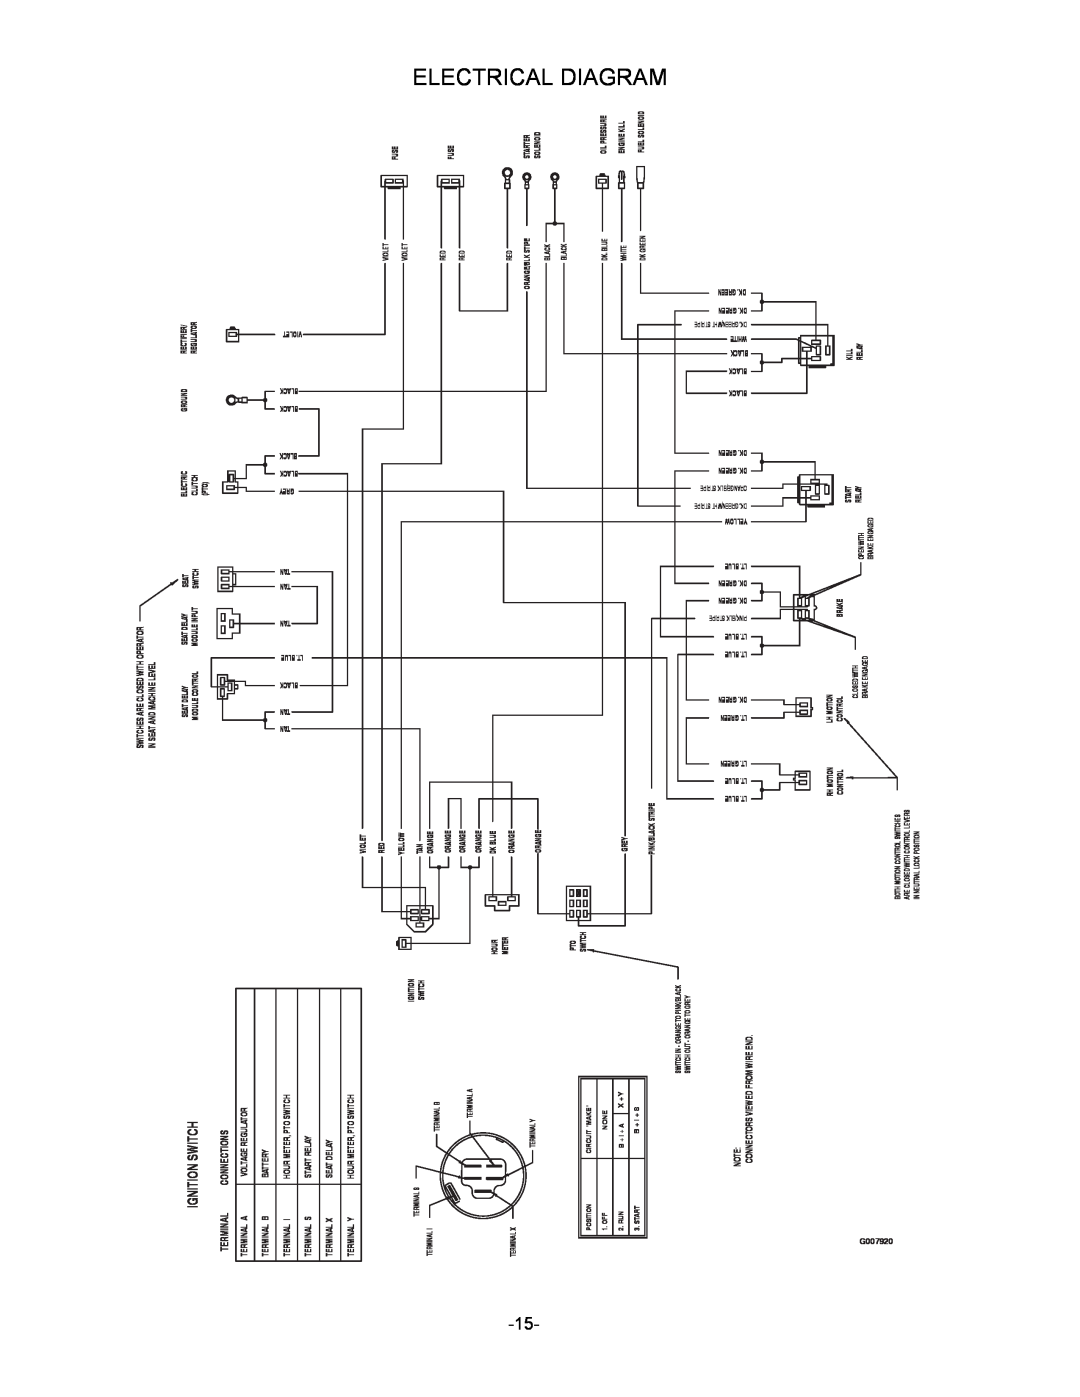 Exmark 4500-461 Electrical Diagram, Ignition Switch, Green .Dk, Violet, Tan Tan Tan Blue .Lt Black Tan Tan, Terminal 